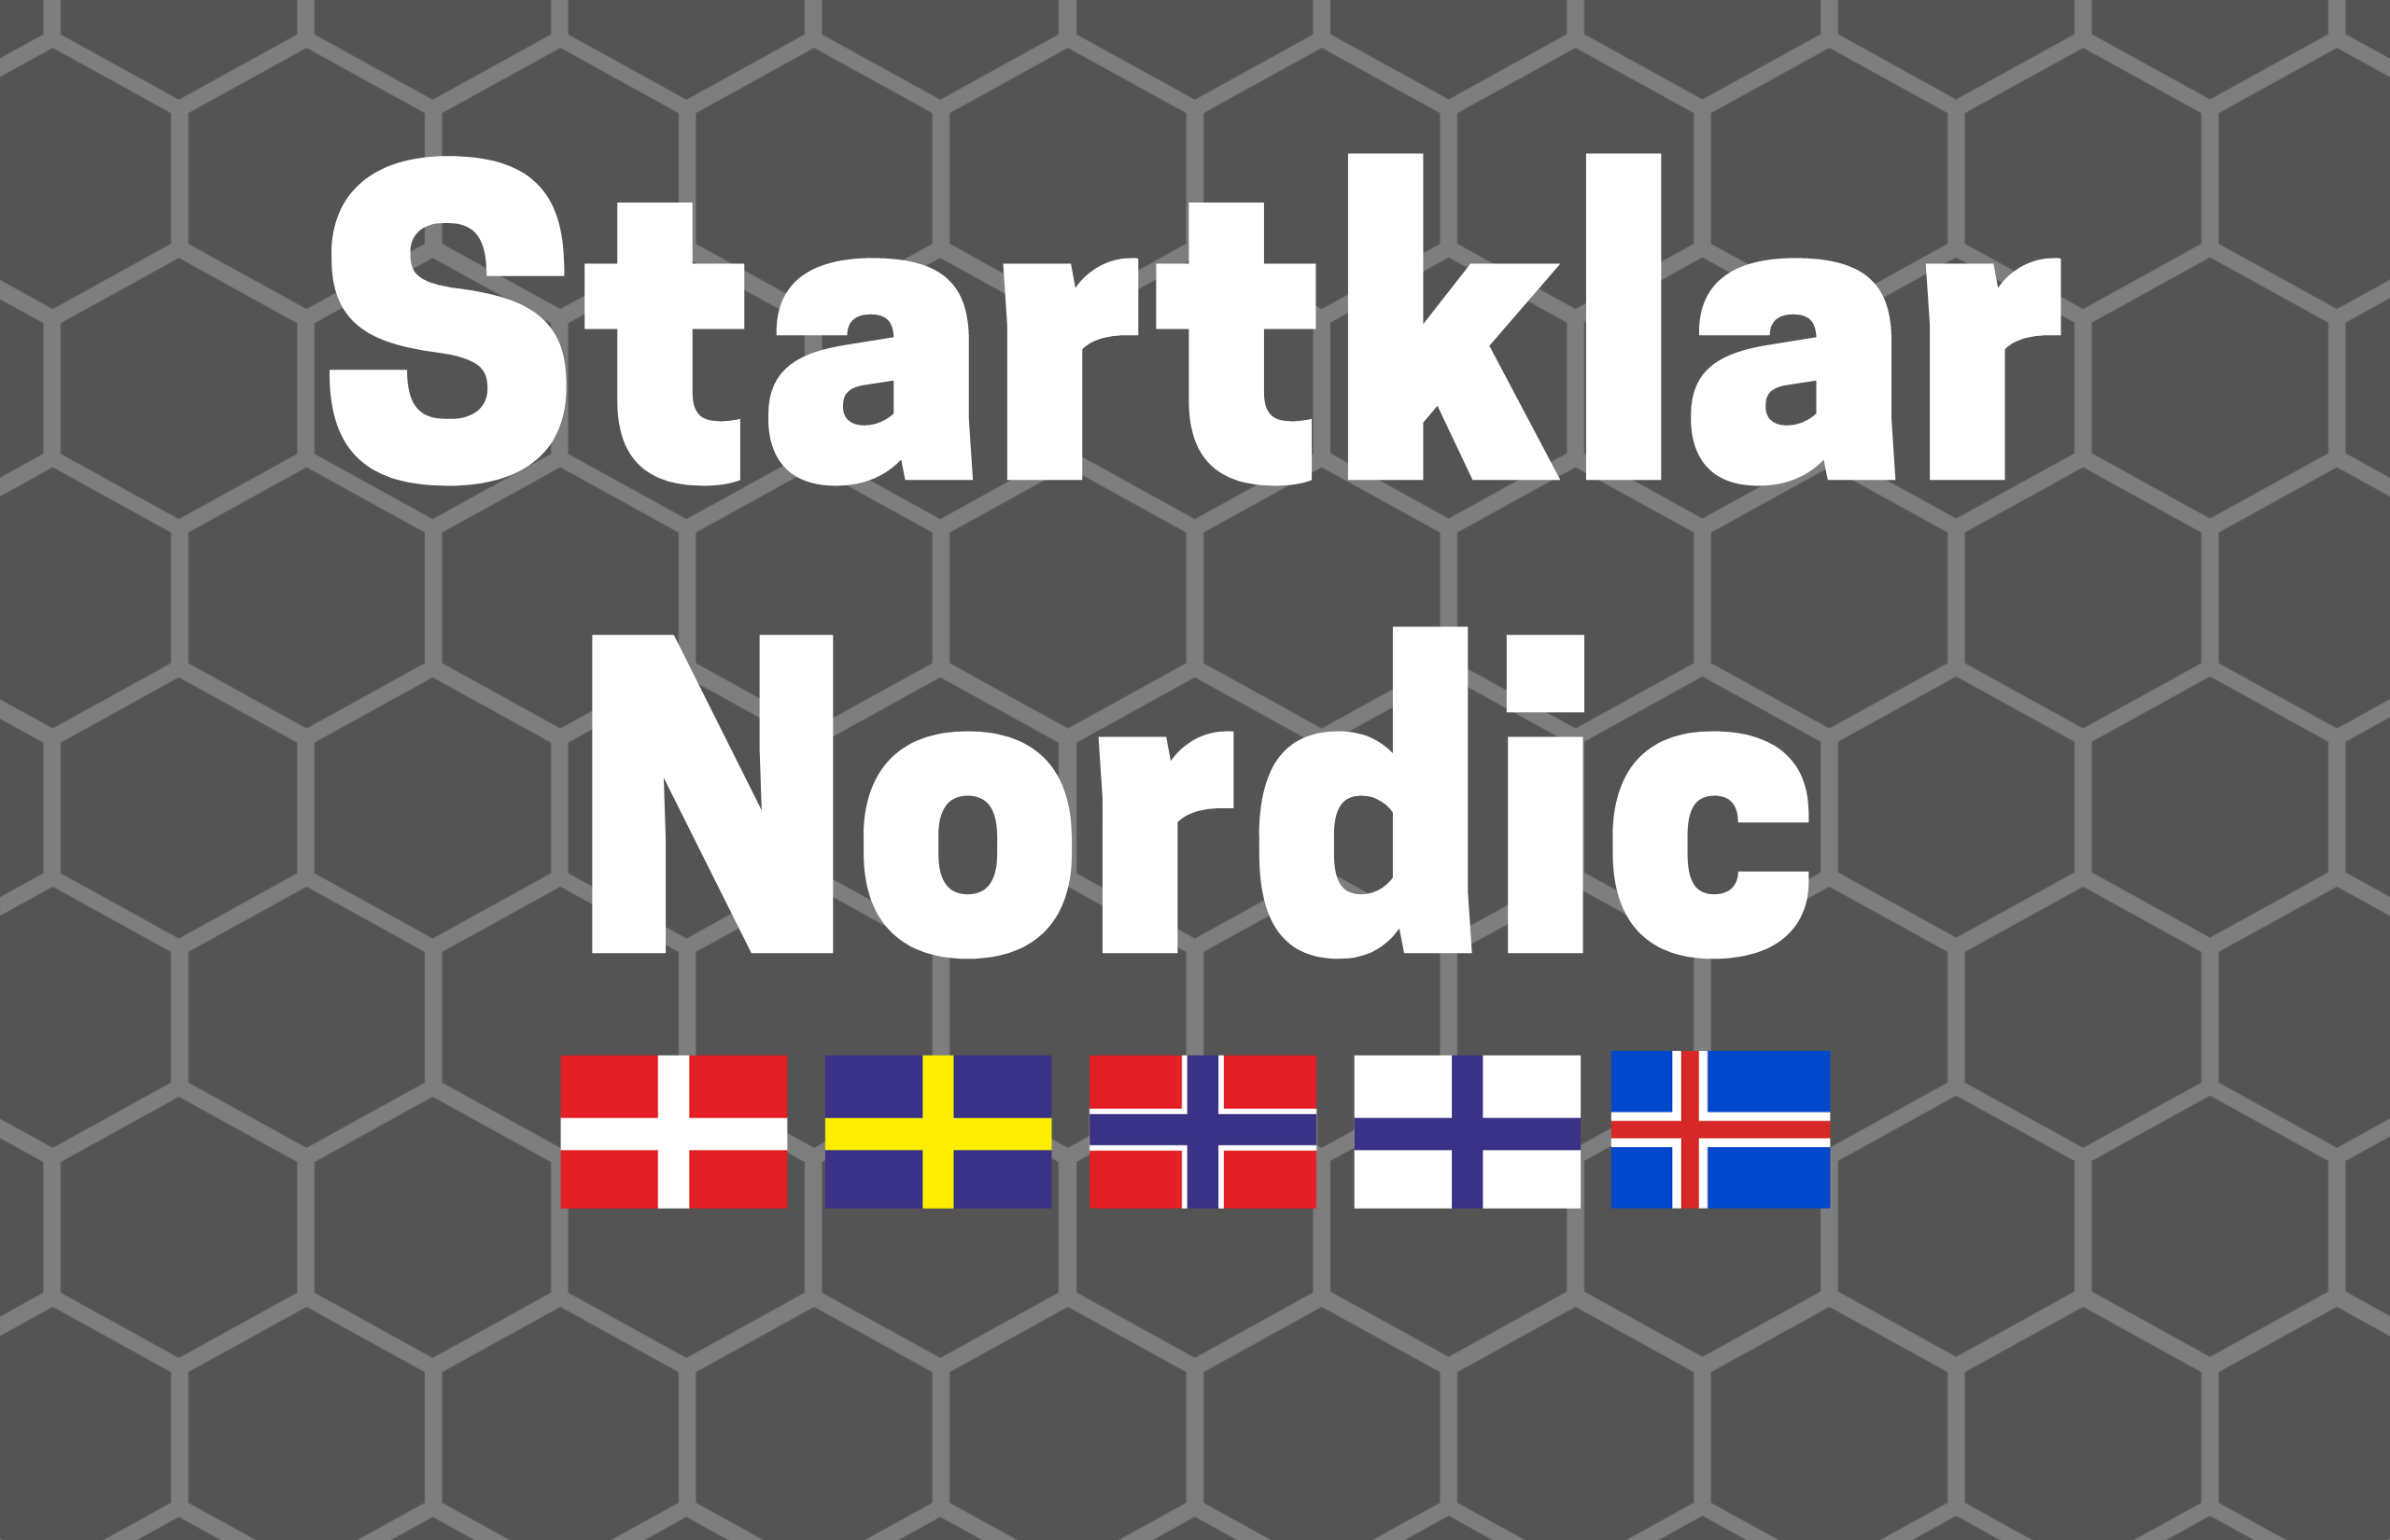 Startklar Nordic forsikring